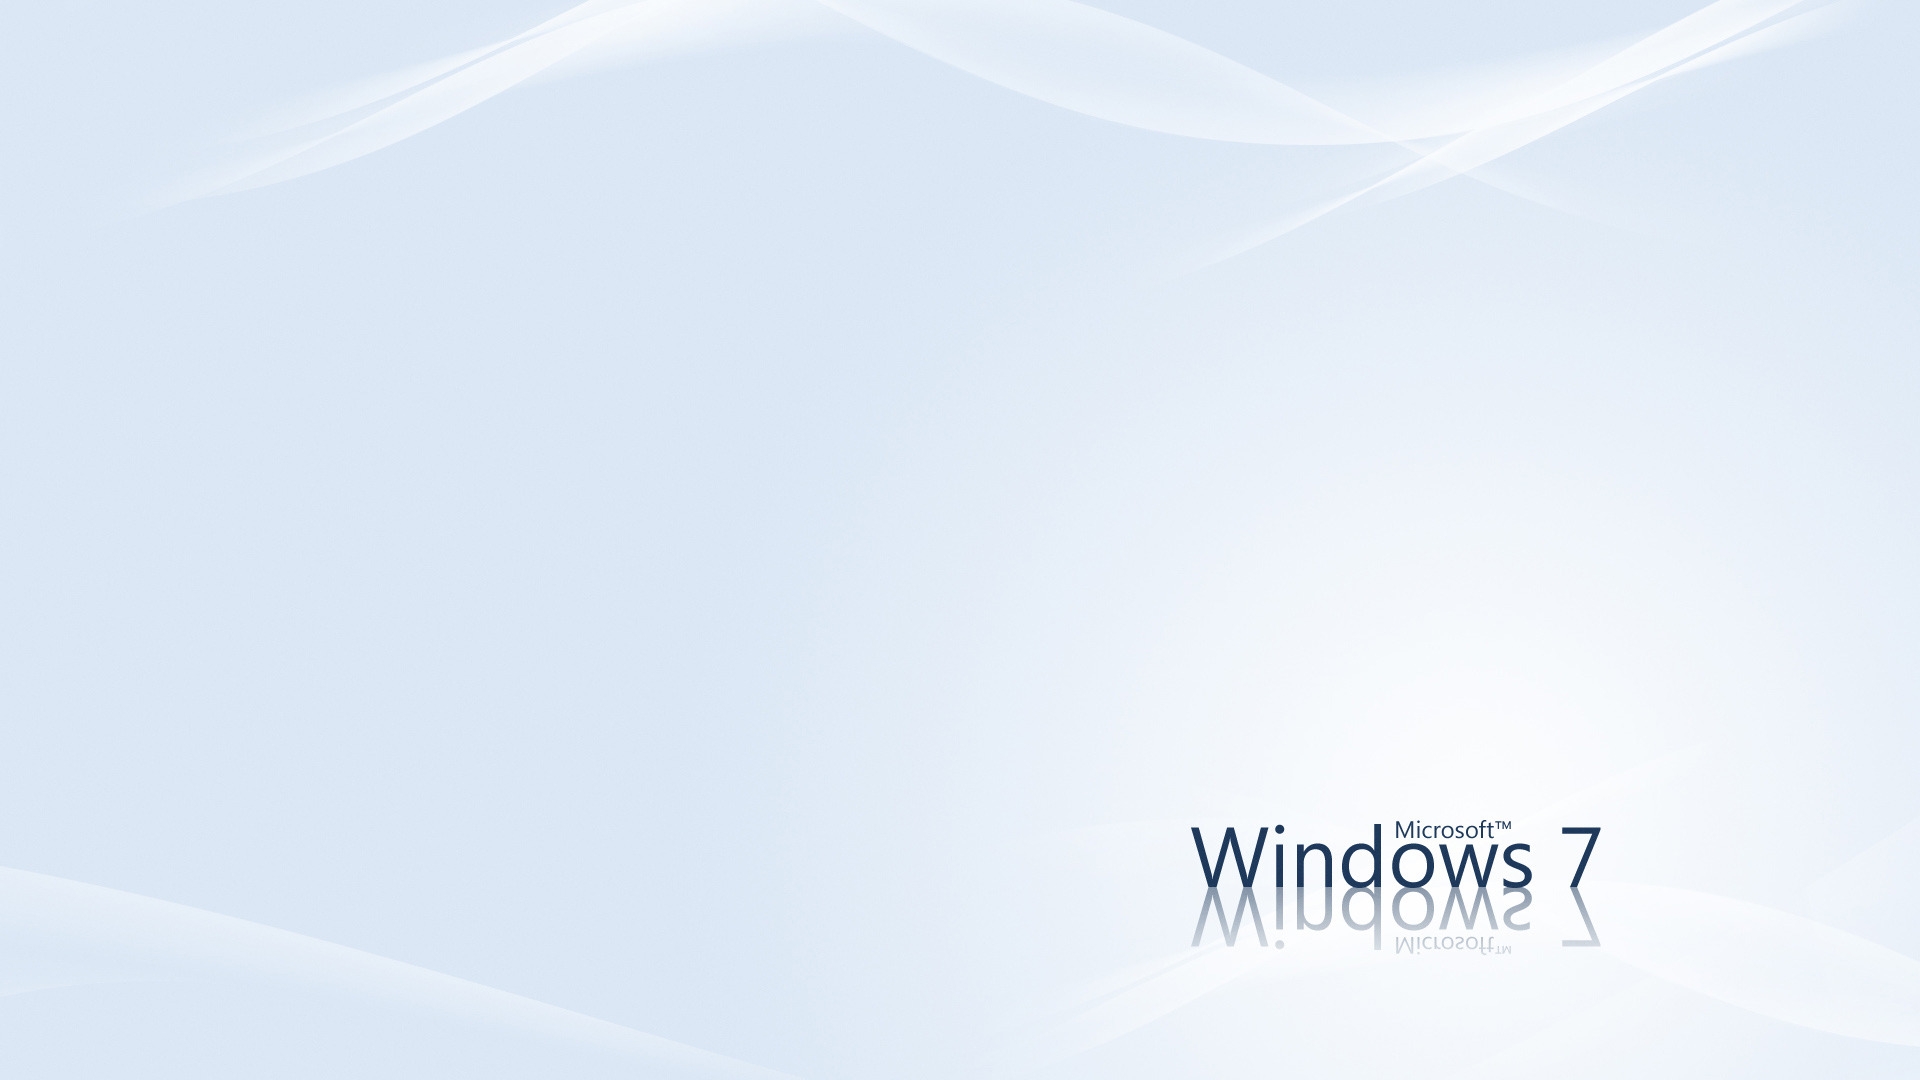 Windows 7 Bright for 1920 x 1080 HDTV 1080p resolution